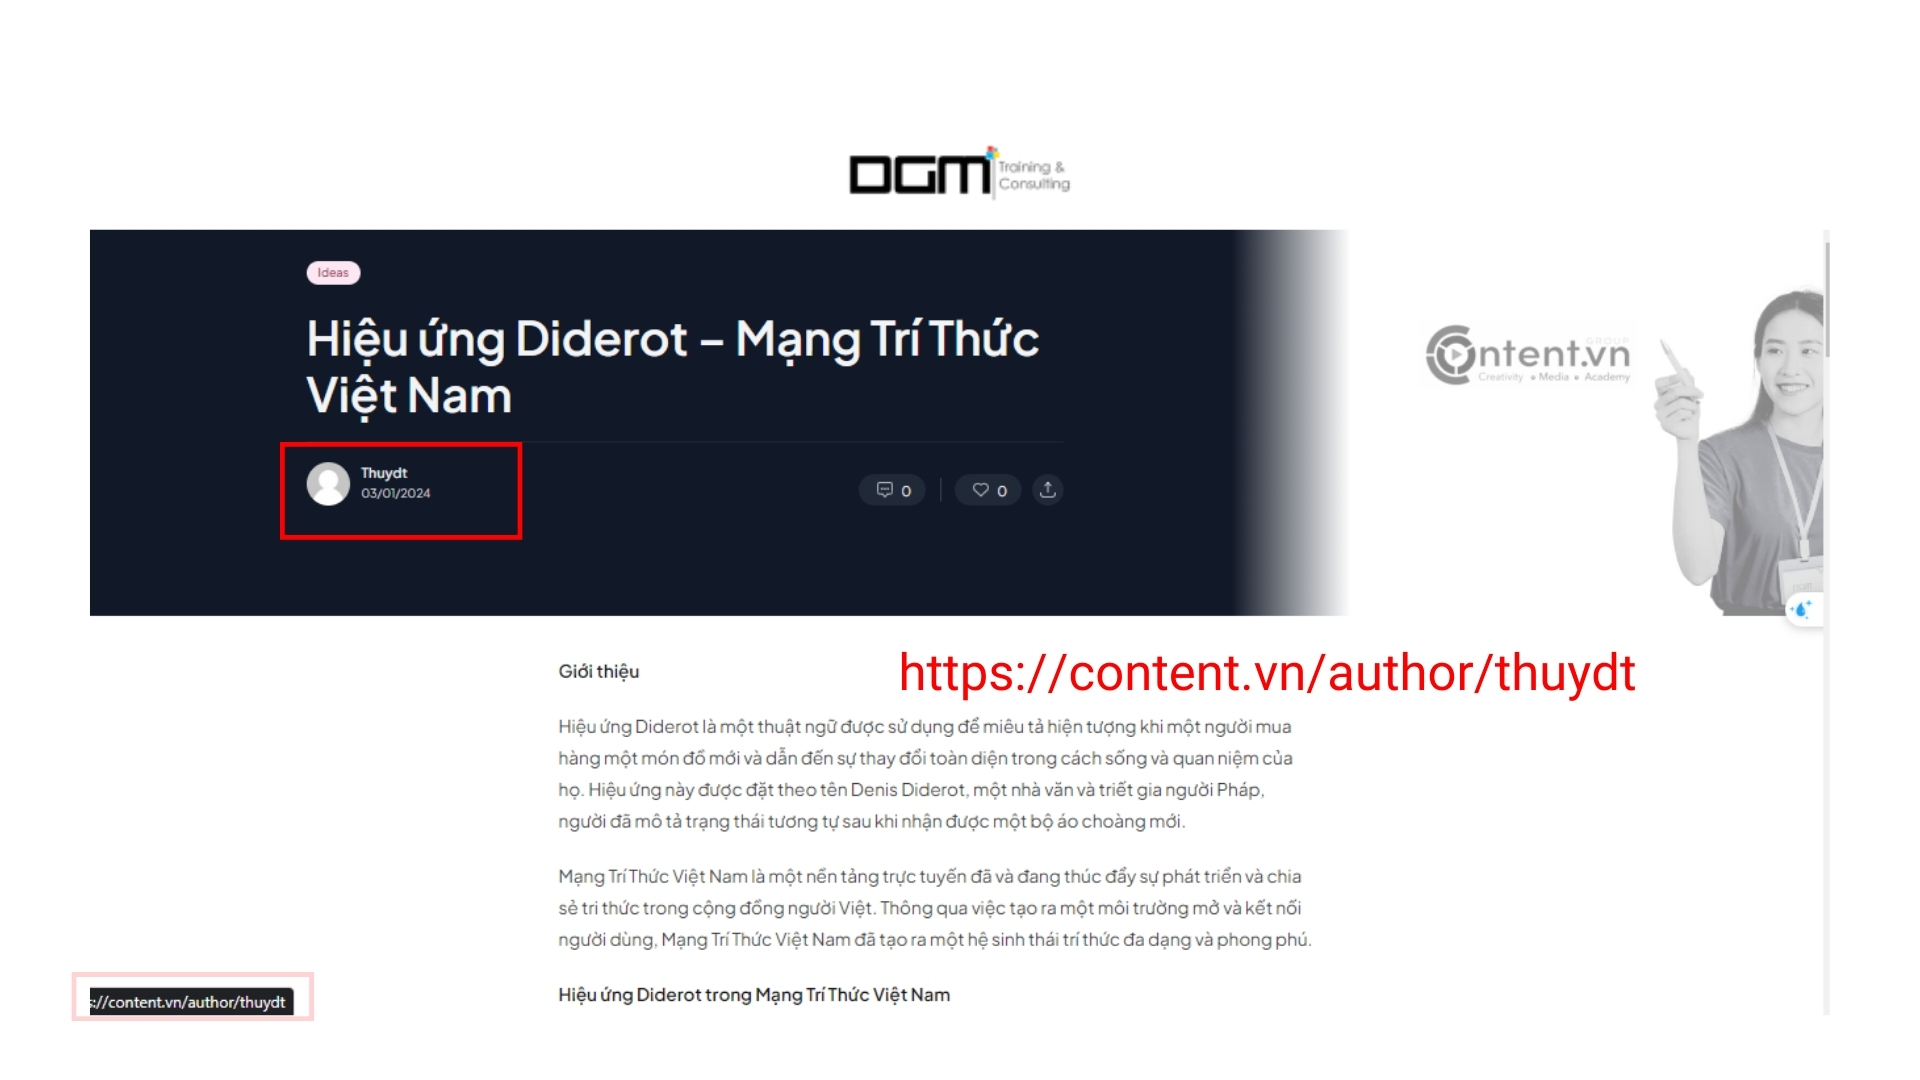 Mot-duong-lien-ket-tro-den-link-author-page-cua-Thuydt